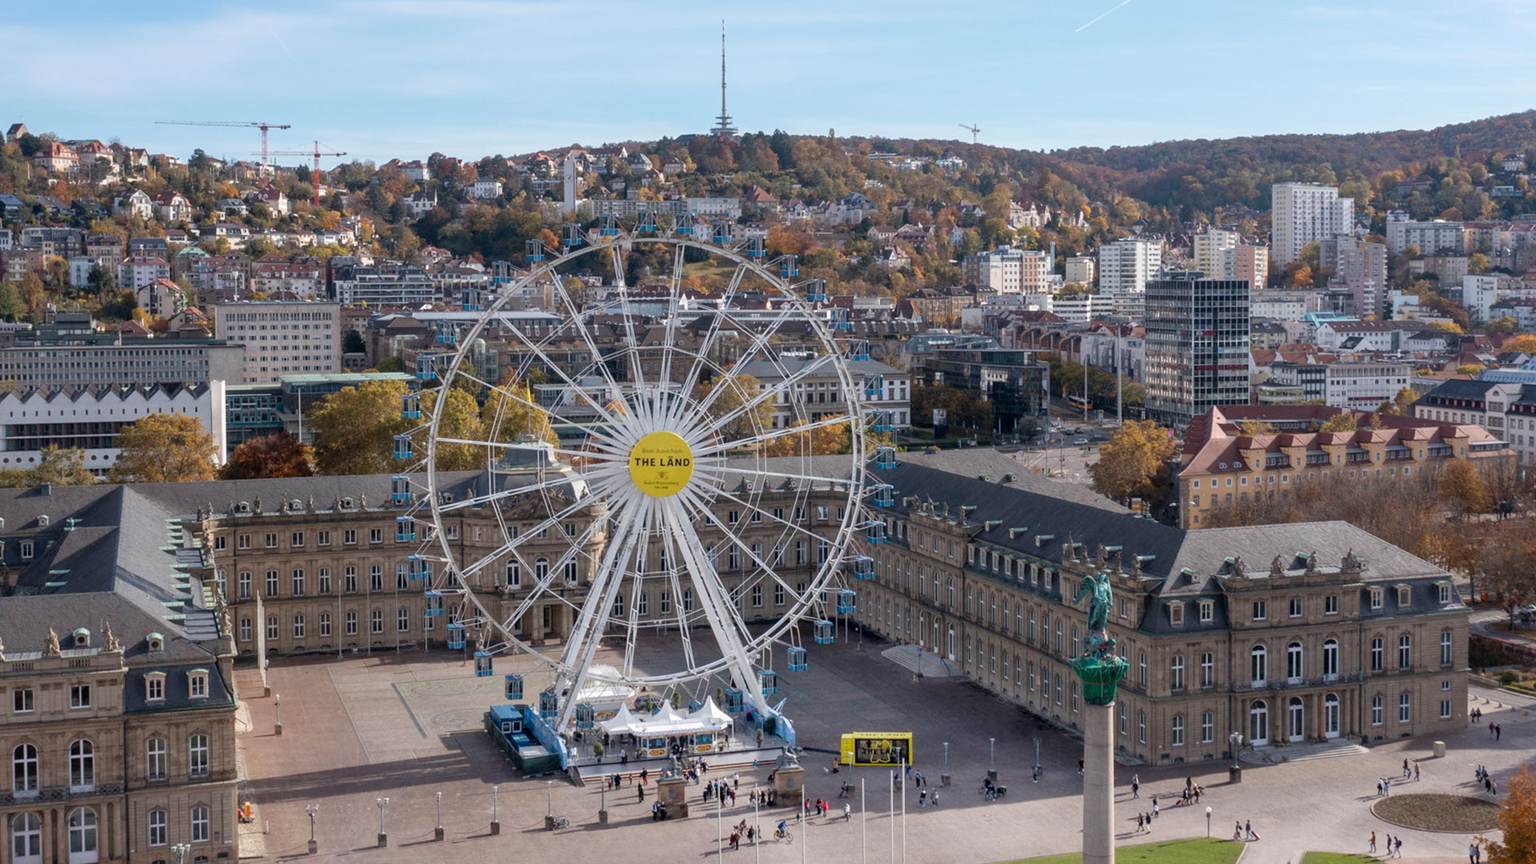 A big THE LÄND ferris wheel in the city of Stuttgart.